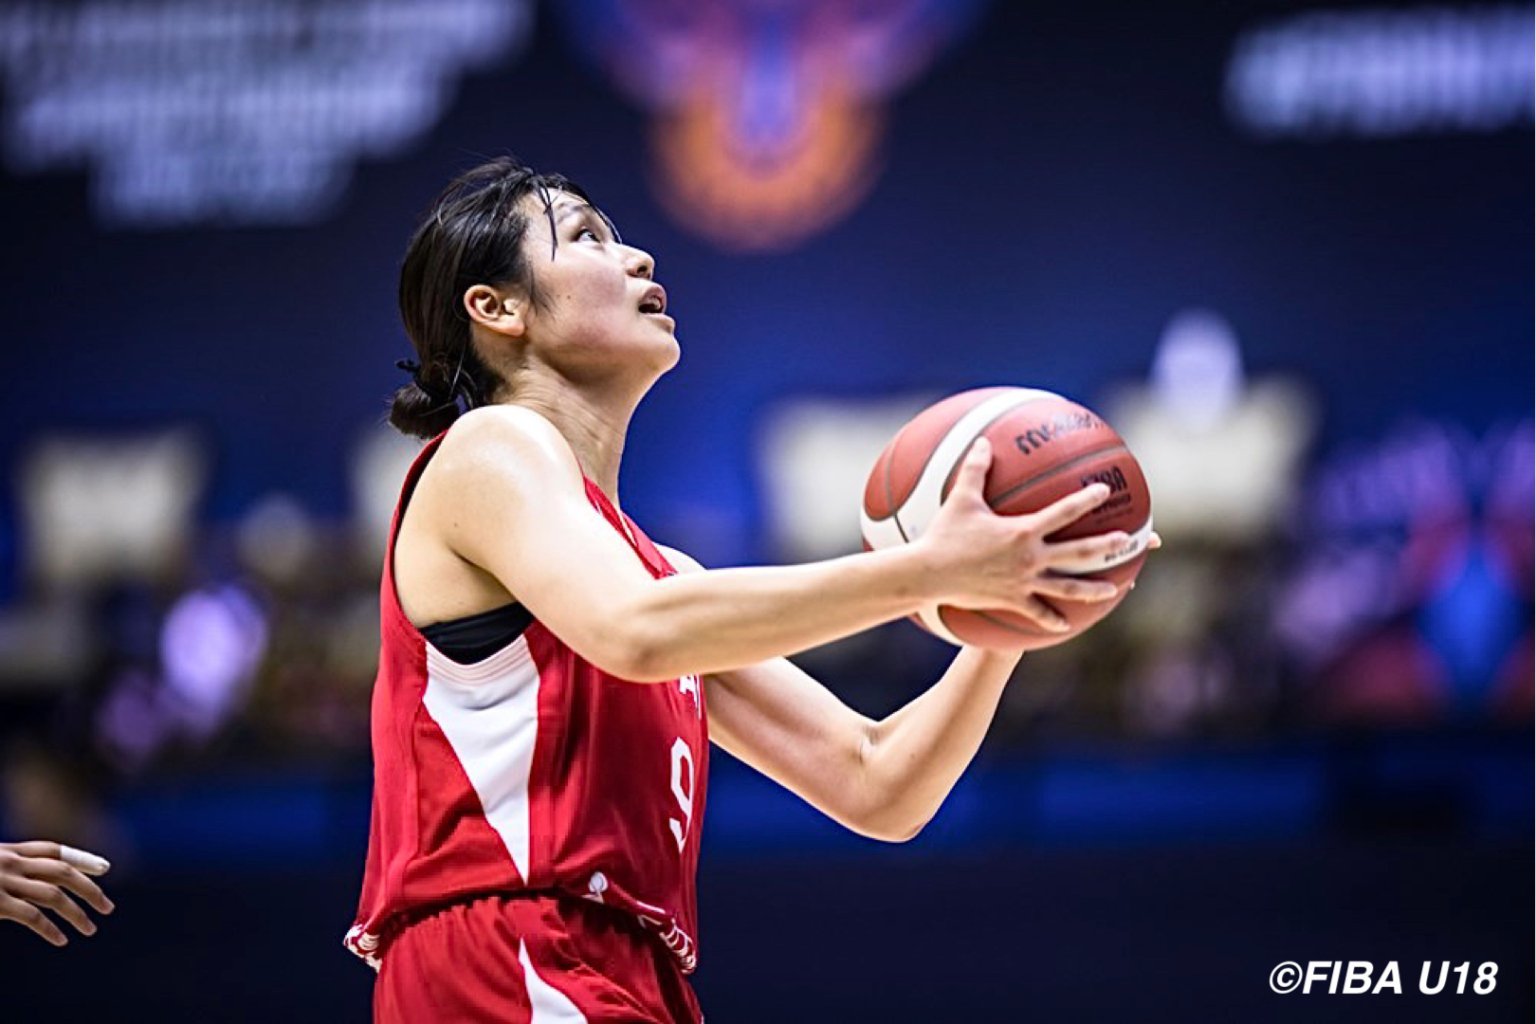 【FIBAU18女子アジア選手権】日本はインドネシアに圧勝して2連勝 #9佐坂光咲キャプテン17得点4アシスト/9.8 19:15中国戦